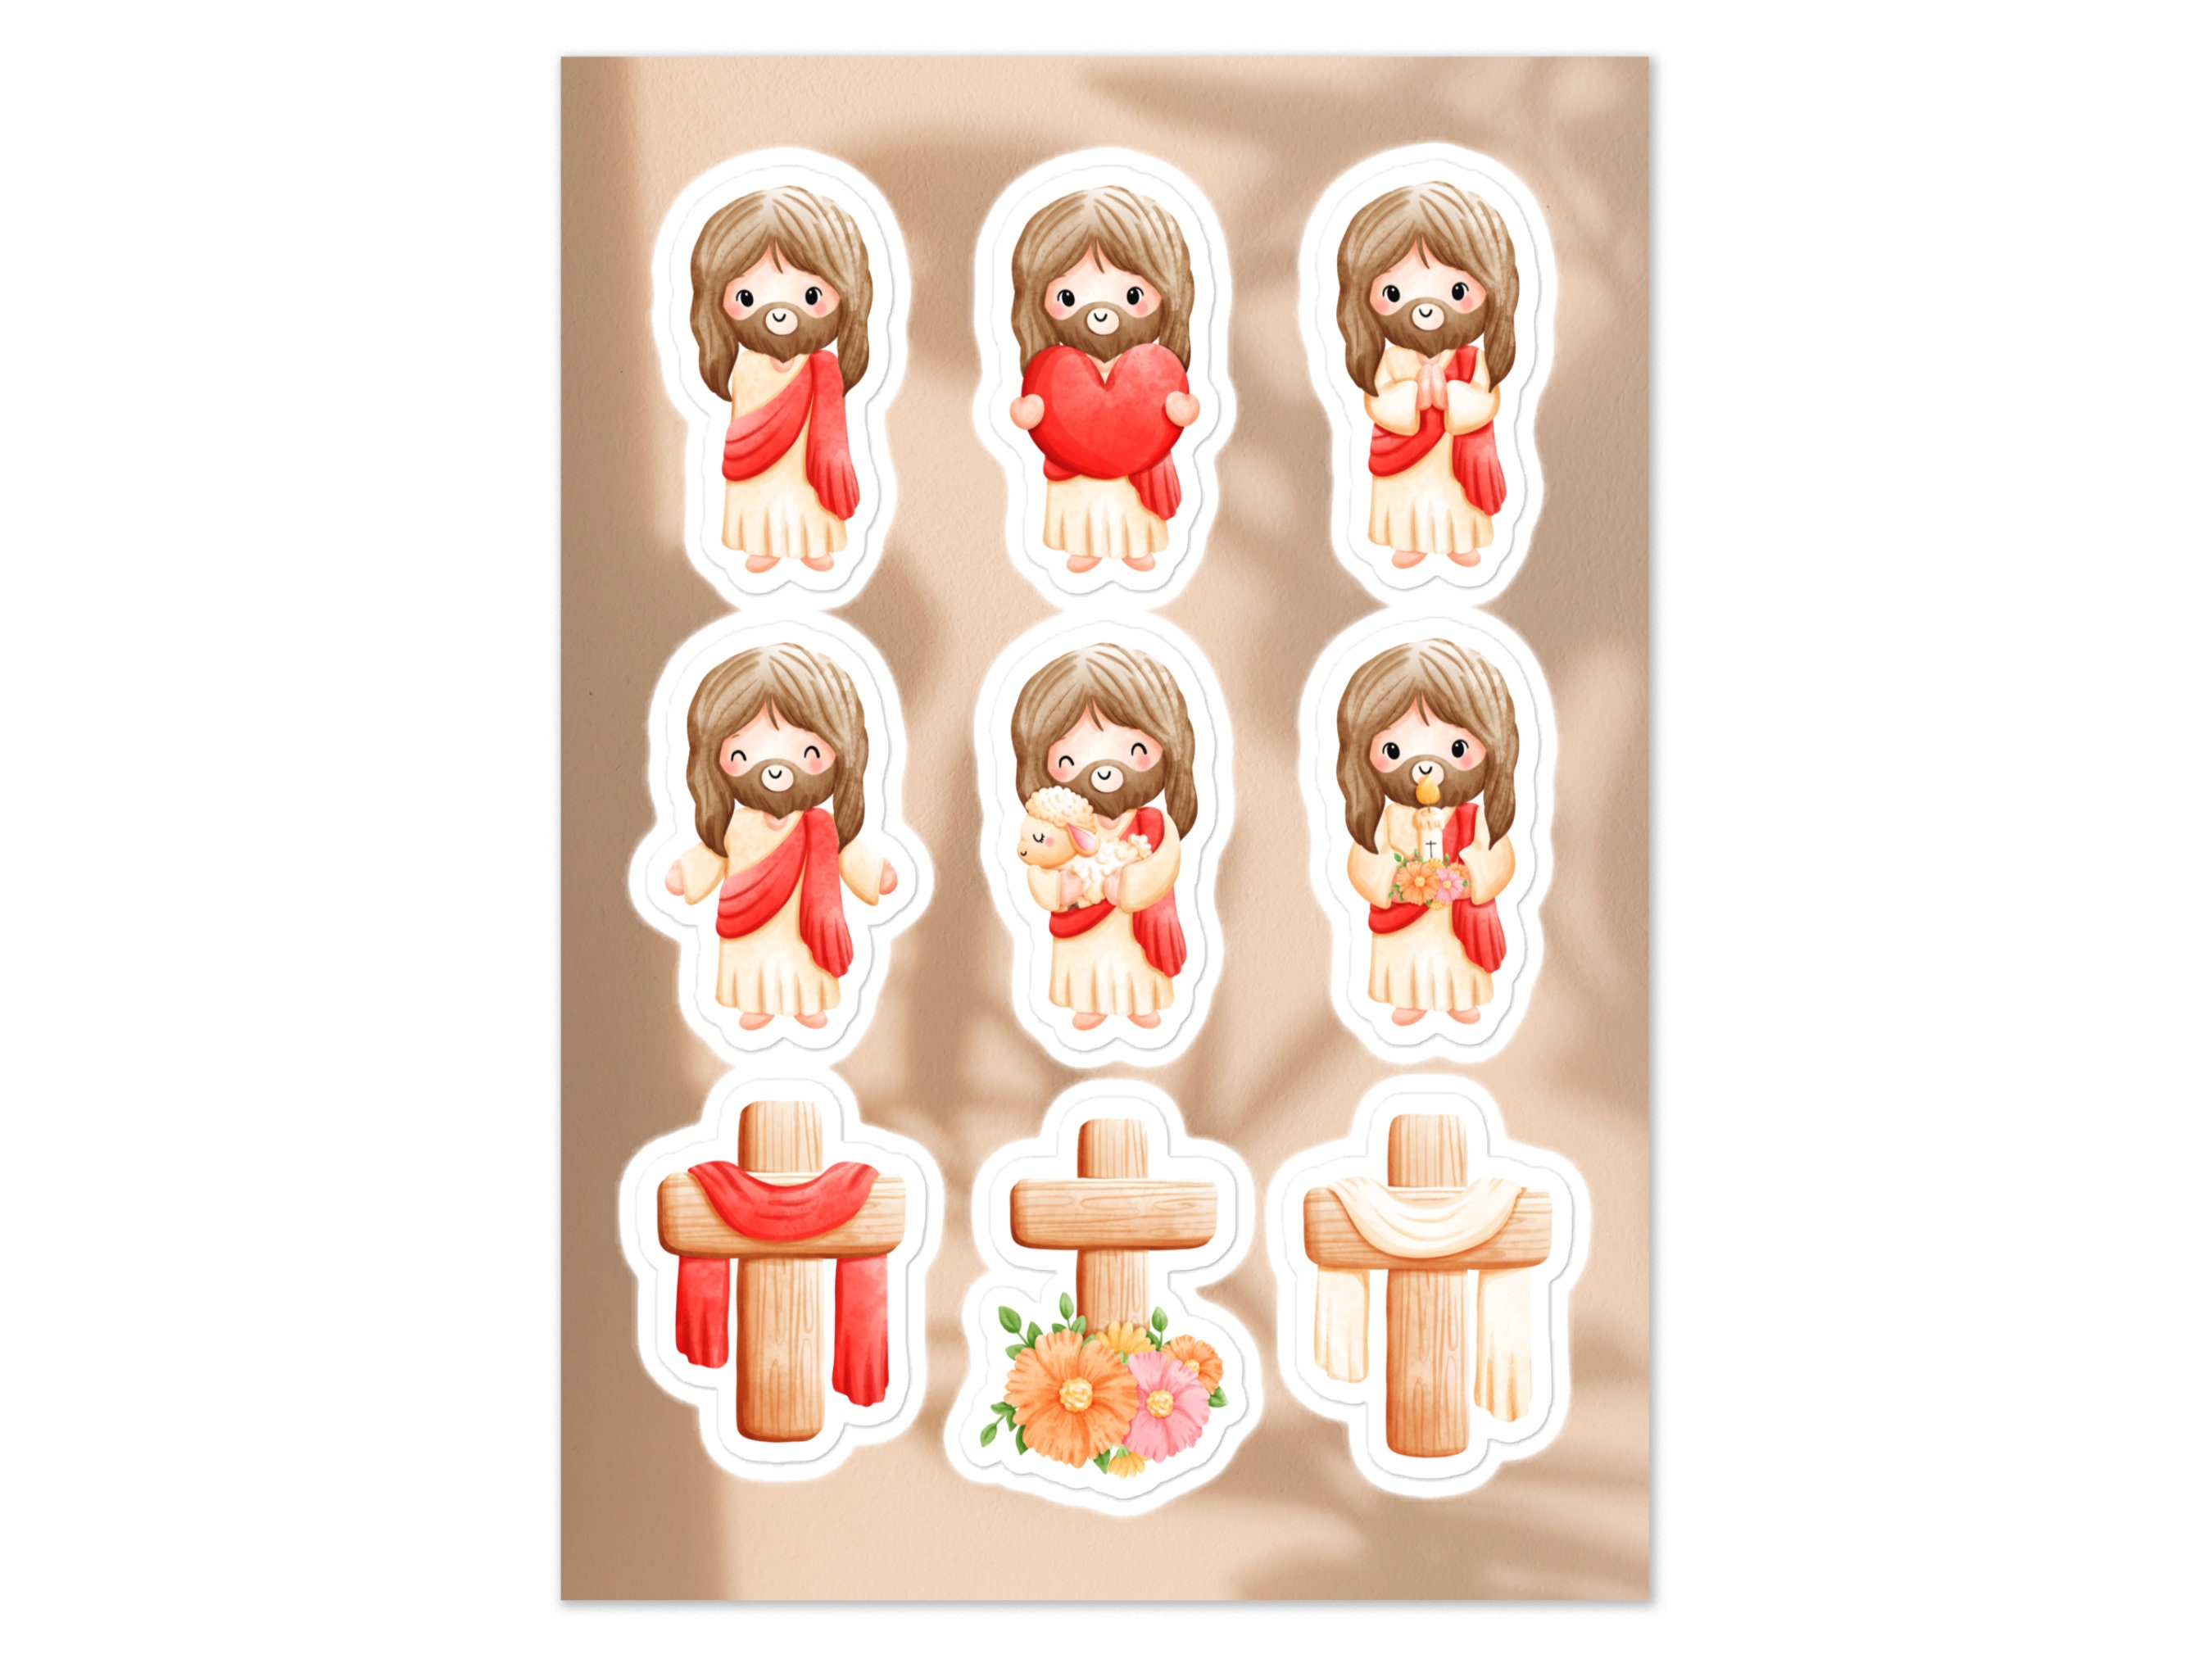 Catholic Stickers - Sheet of 9 religious stickers